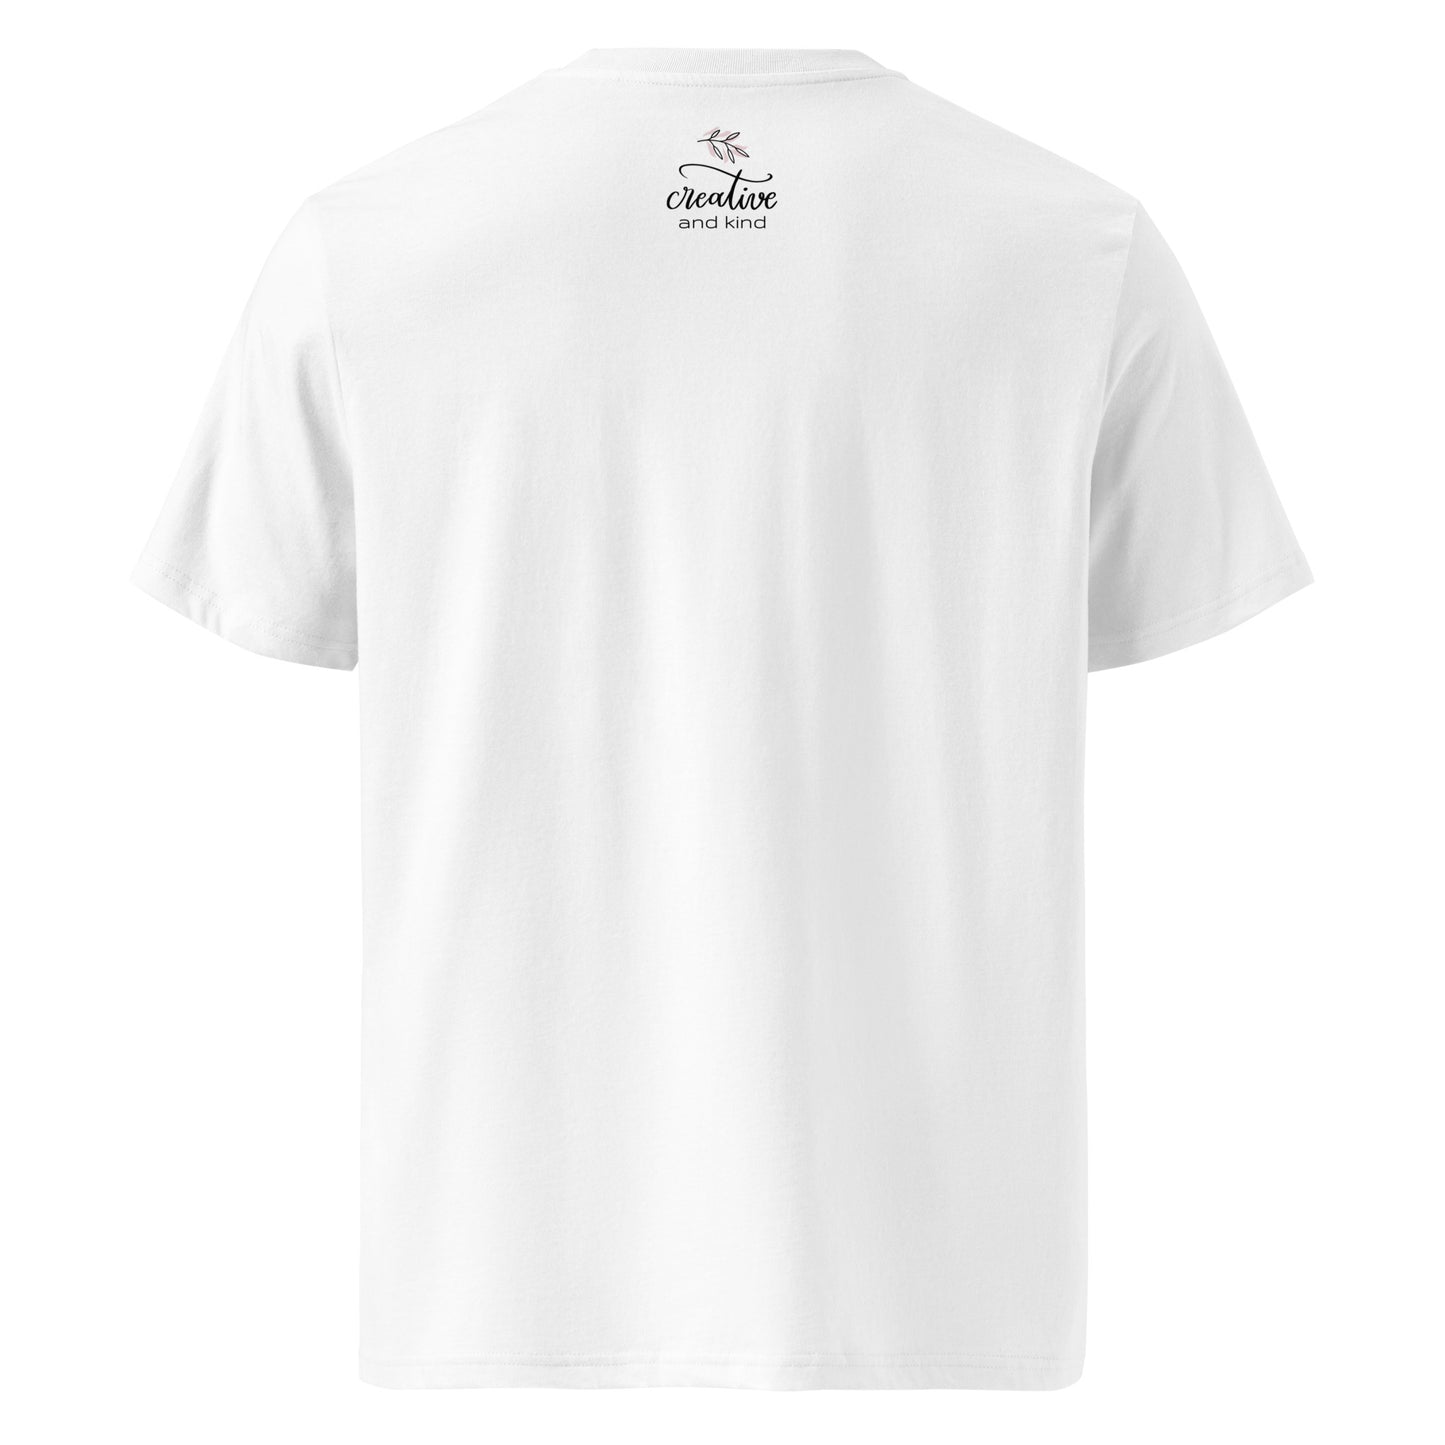 Unisex organic cotton t-shirt "Bad vibes"